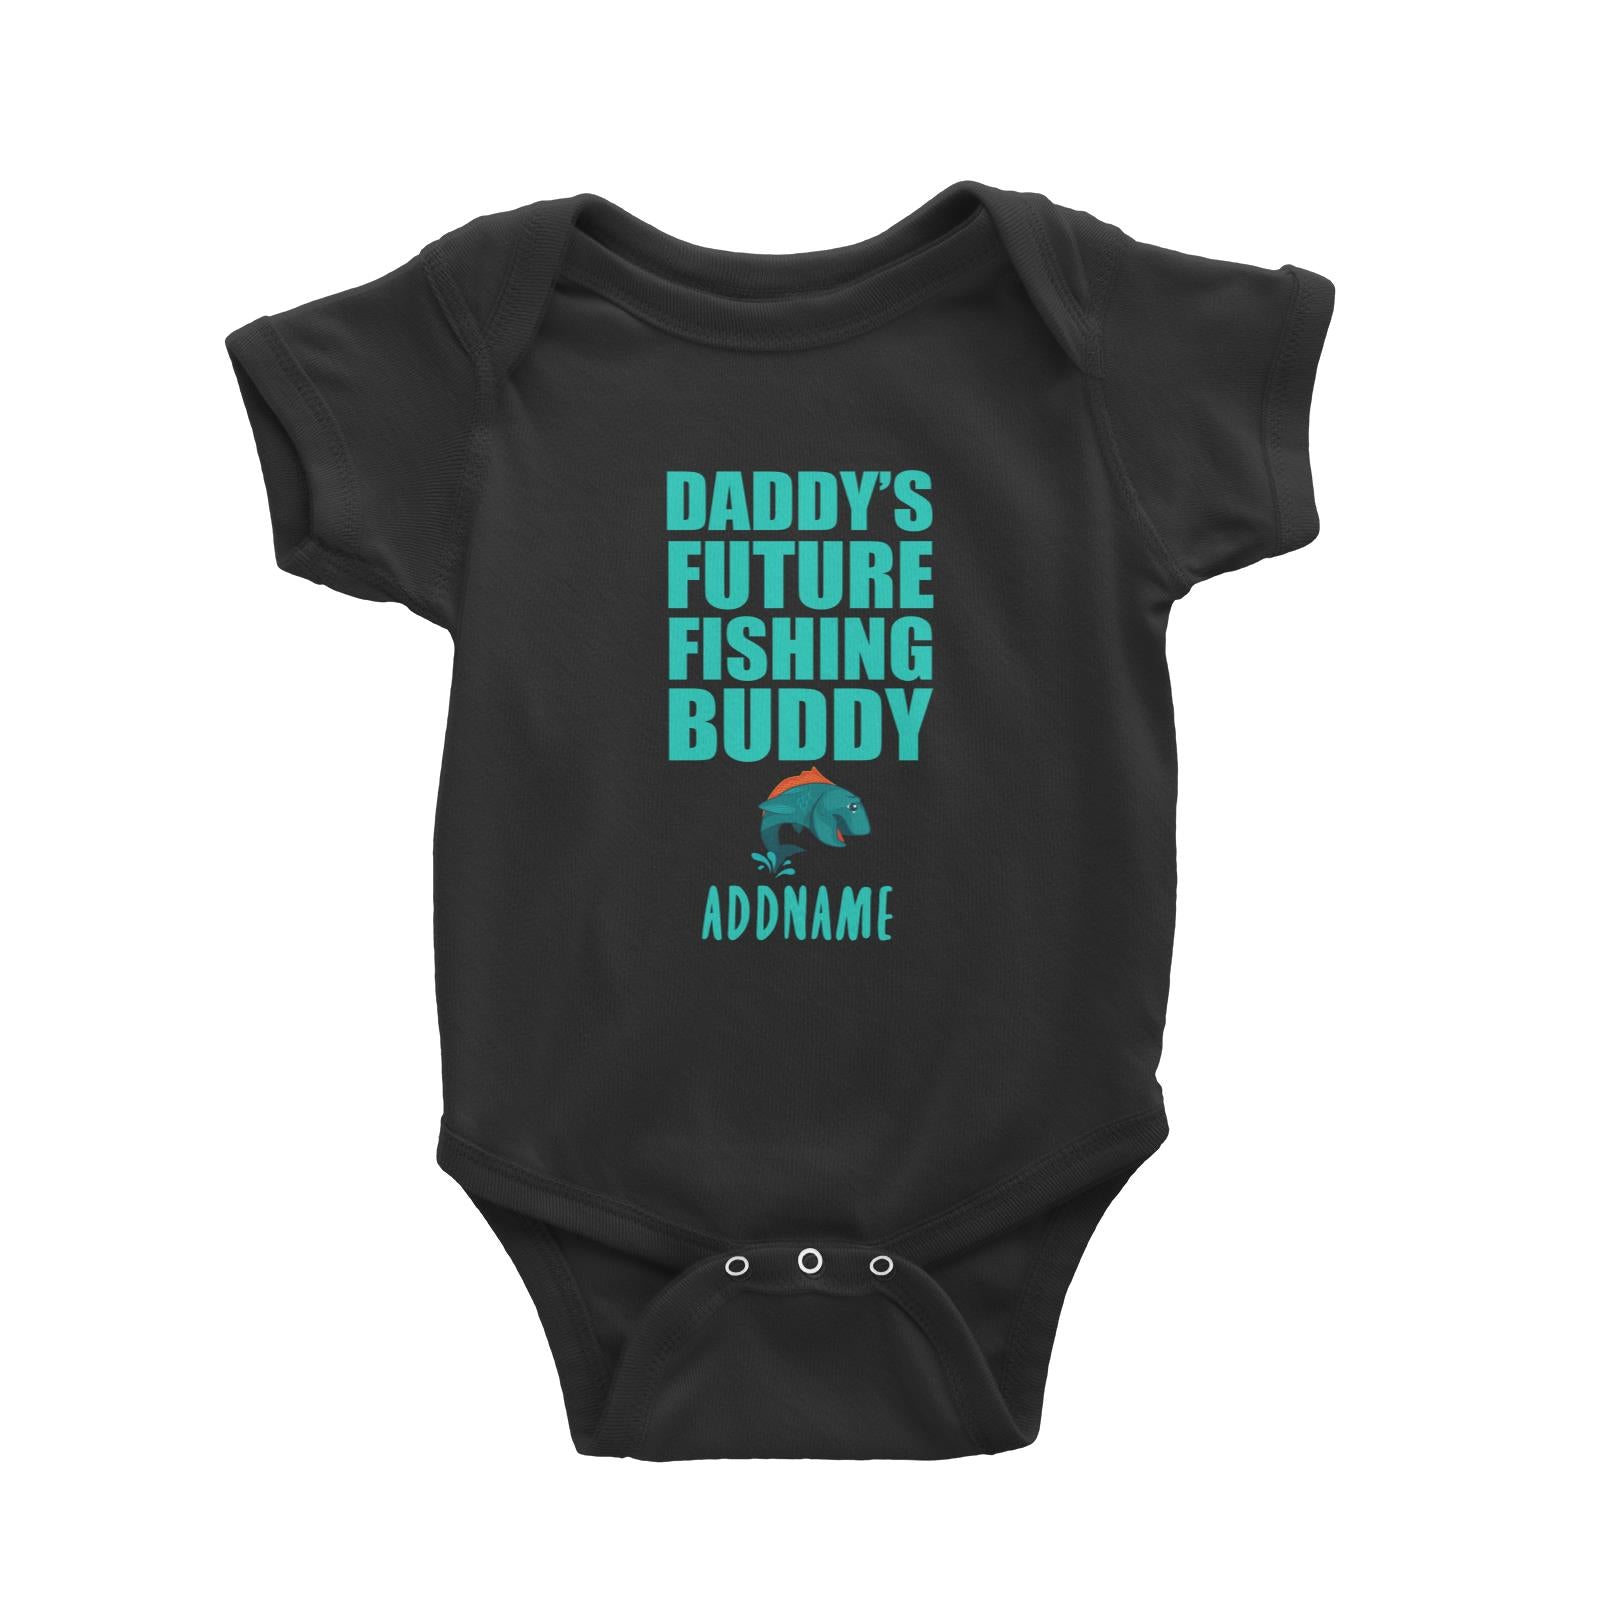 Daddy's Future Fishing Buddy Addname Baby Romper Personalizable Designs Basic Newborn